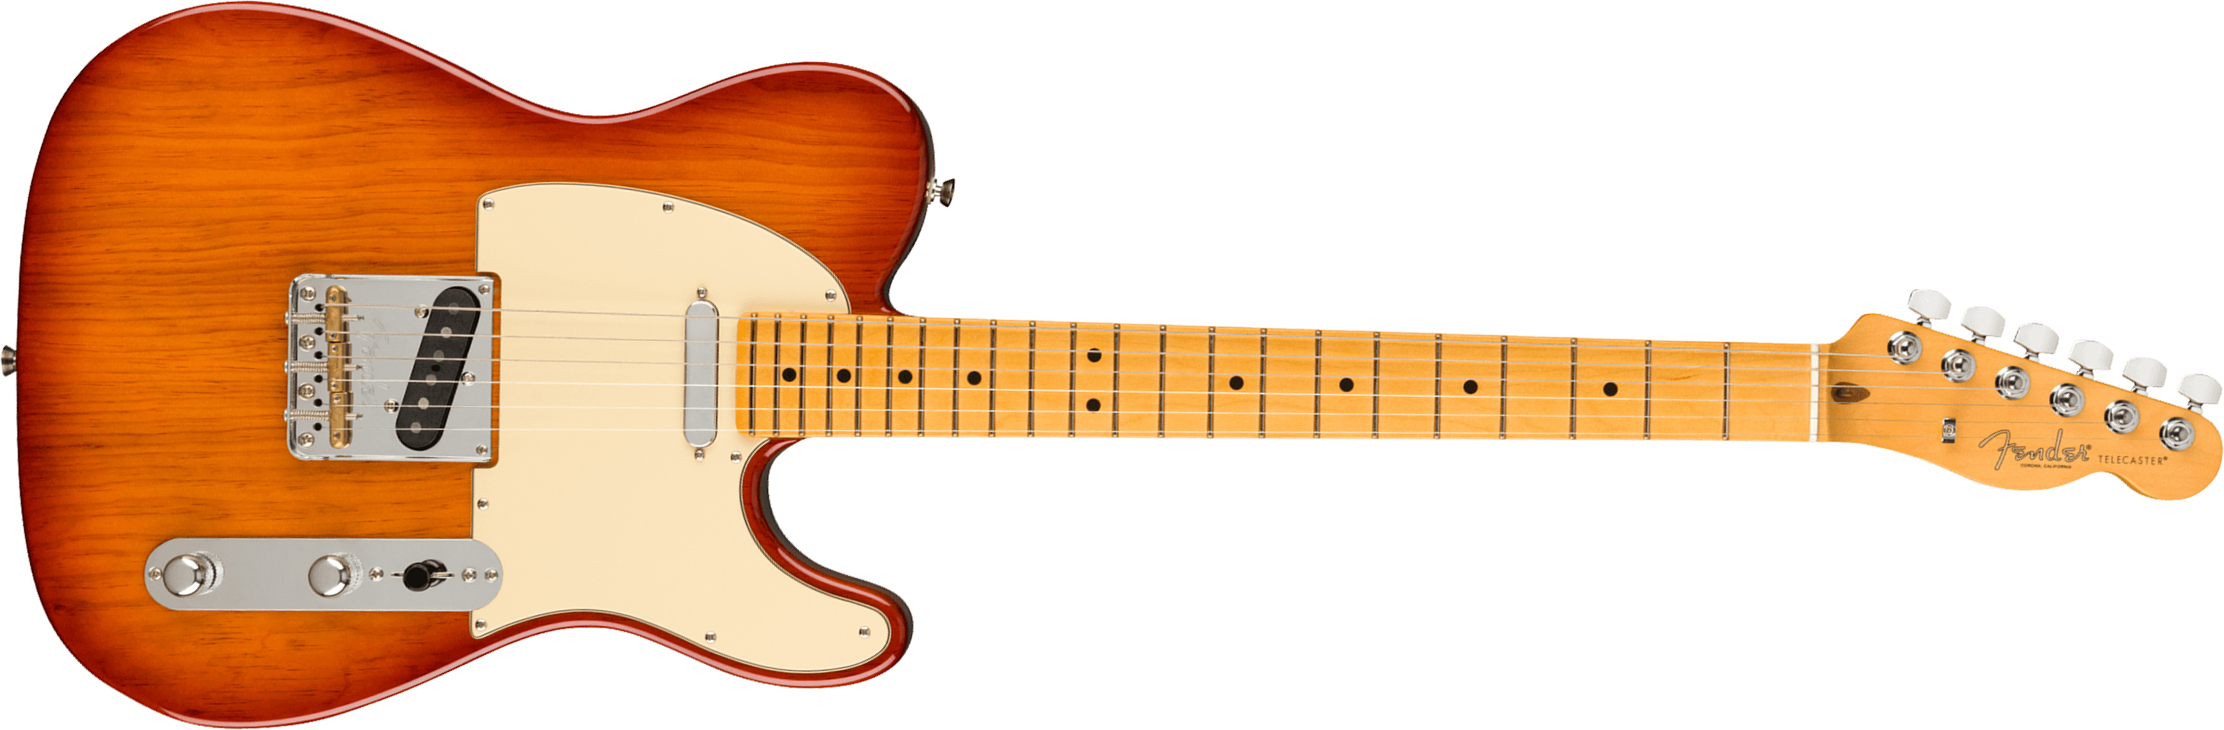 Fender Tele American Professional Ii Usa Mn - Sienna Sunburst - Tel shape electric guitar - Main picture